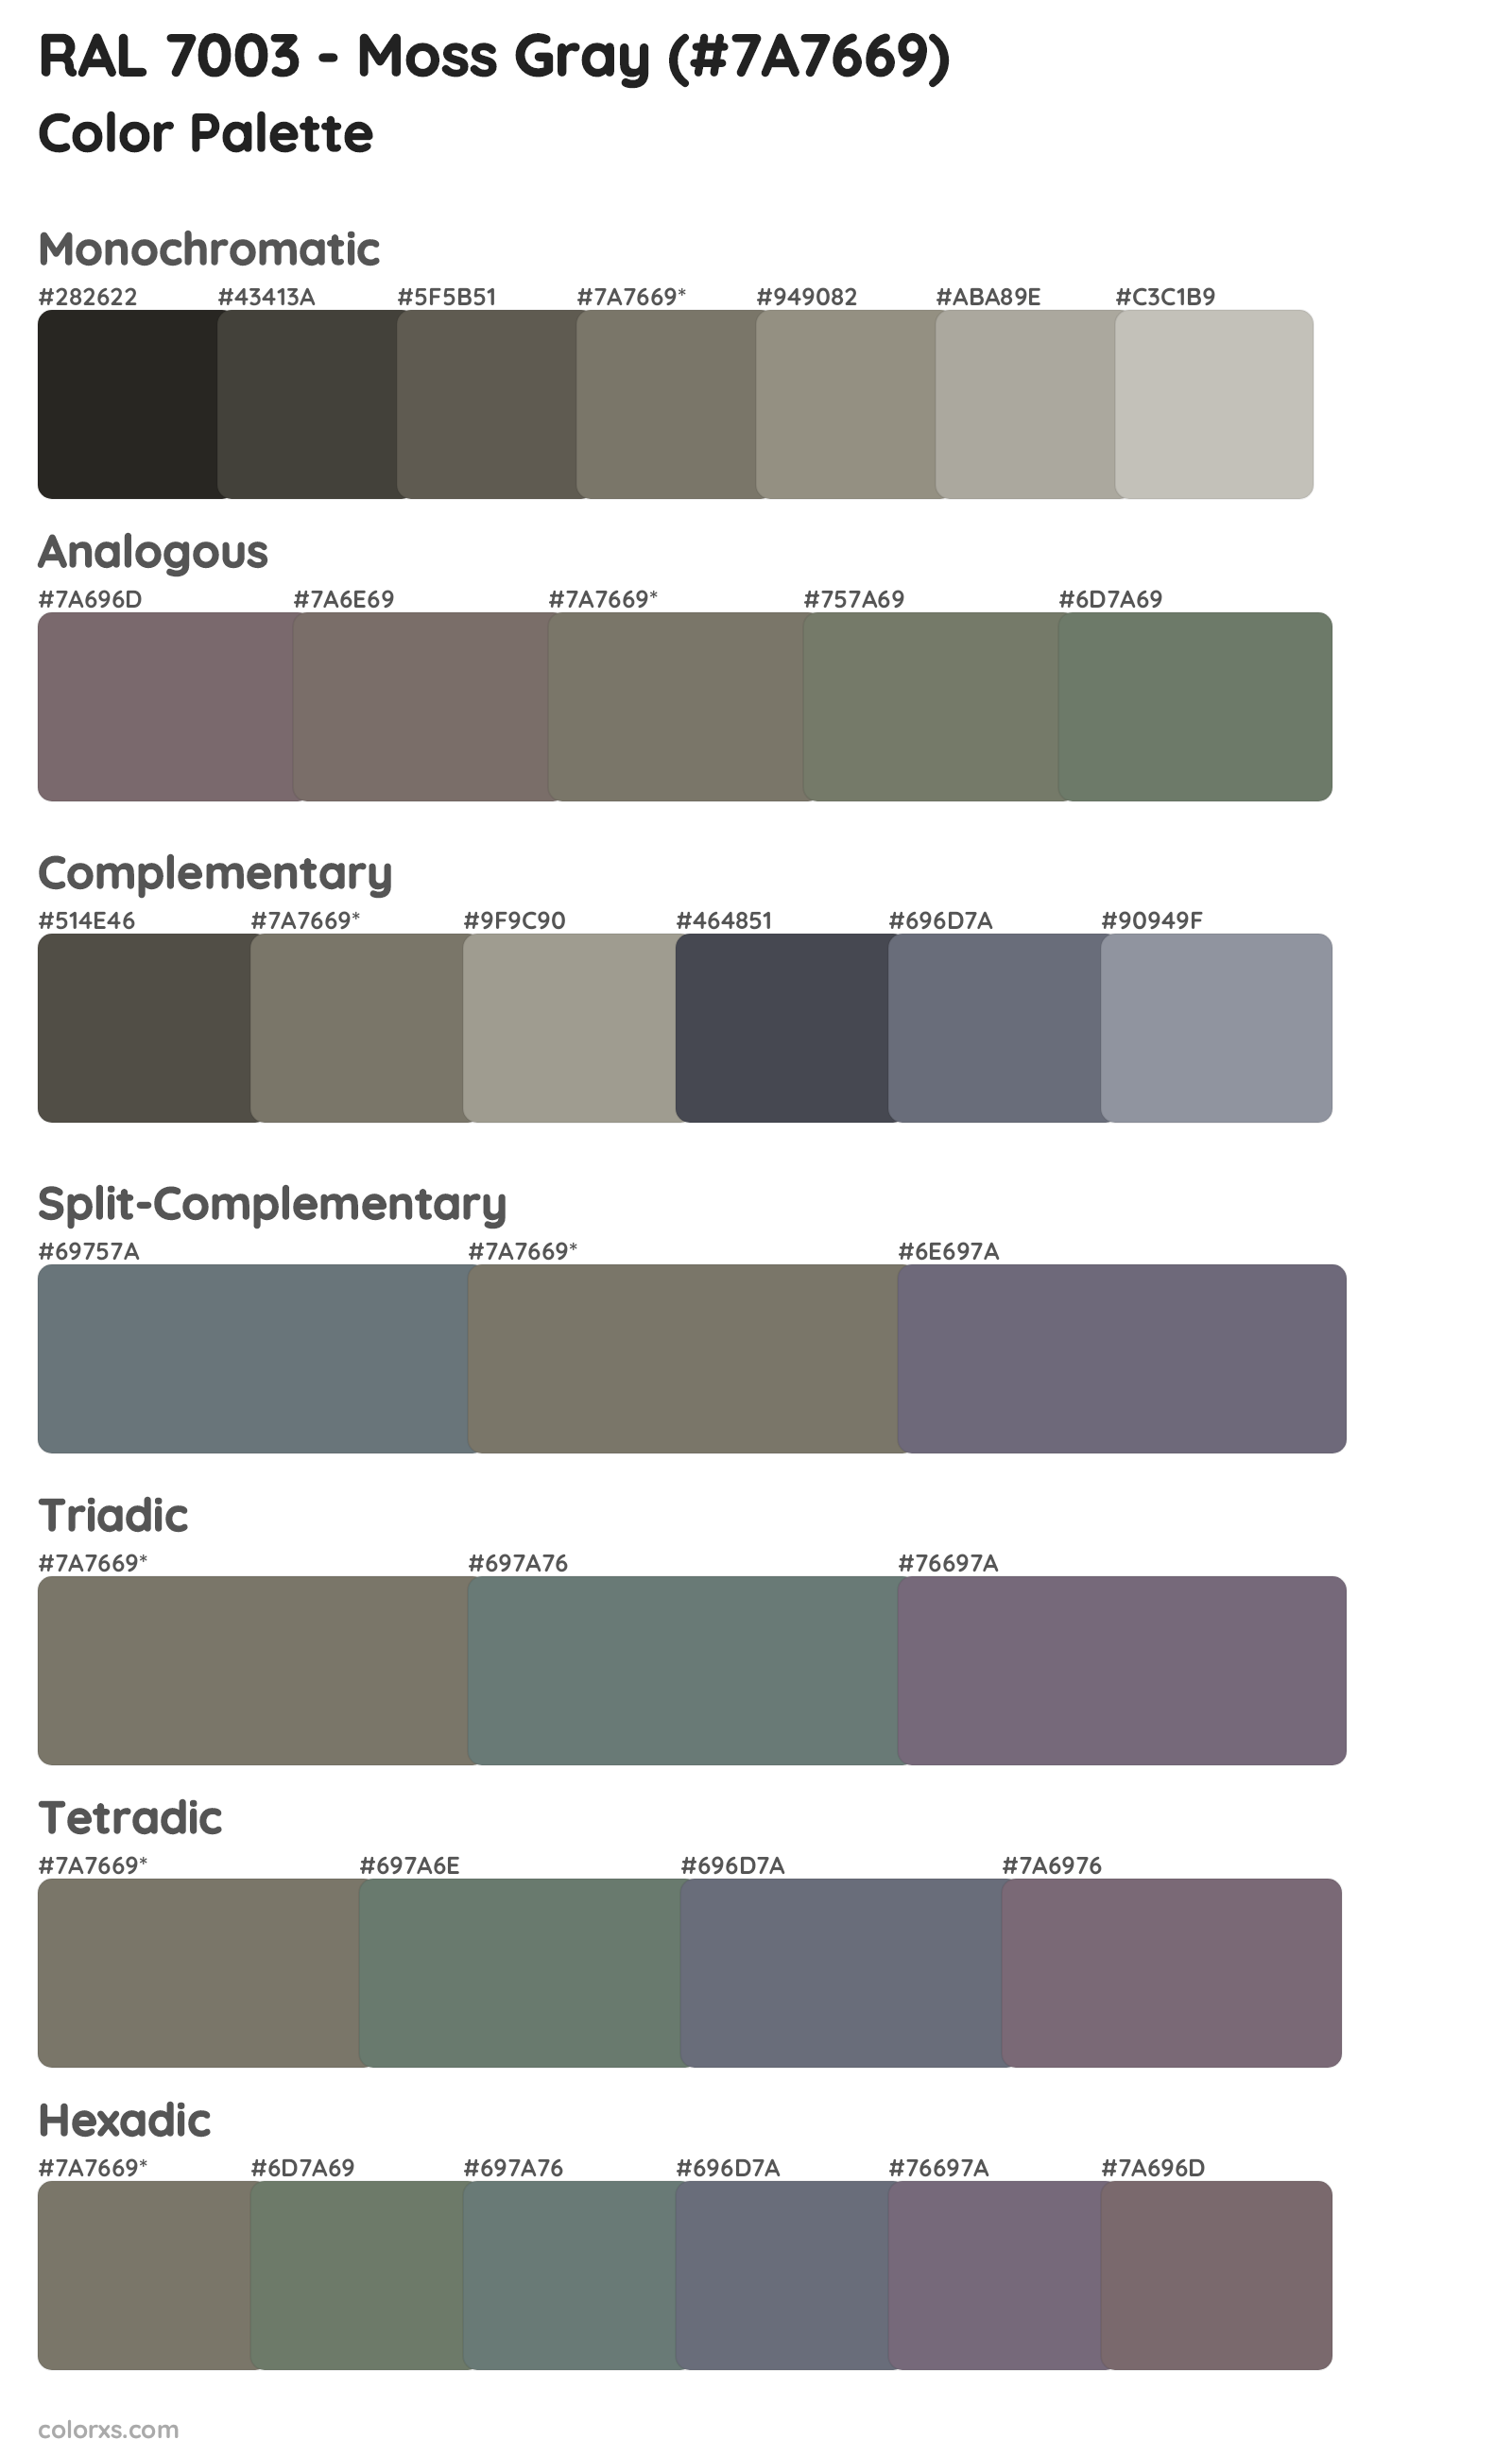 RAL 7003 - Moss Gray Color Scheme Palettes